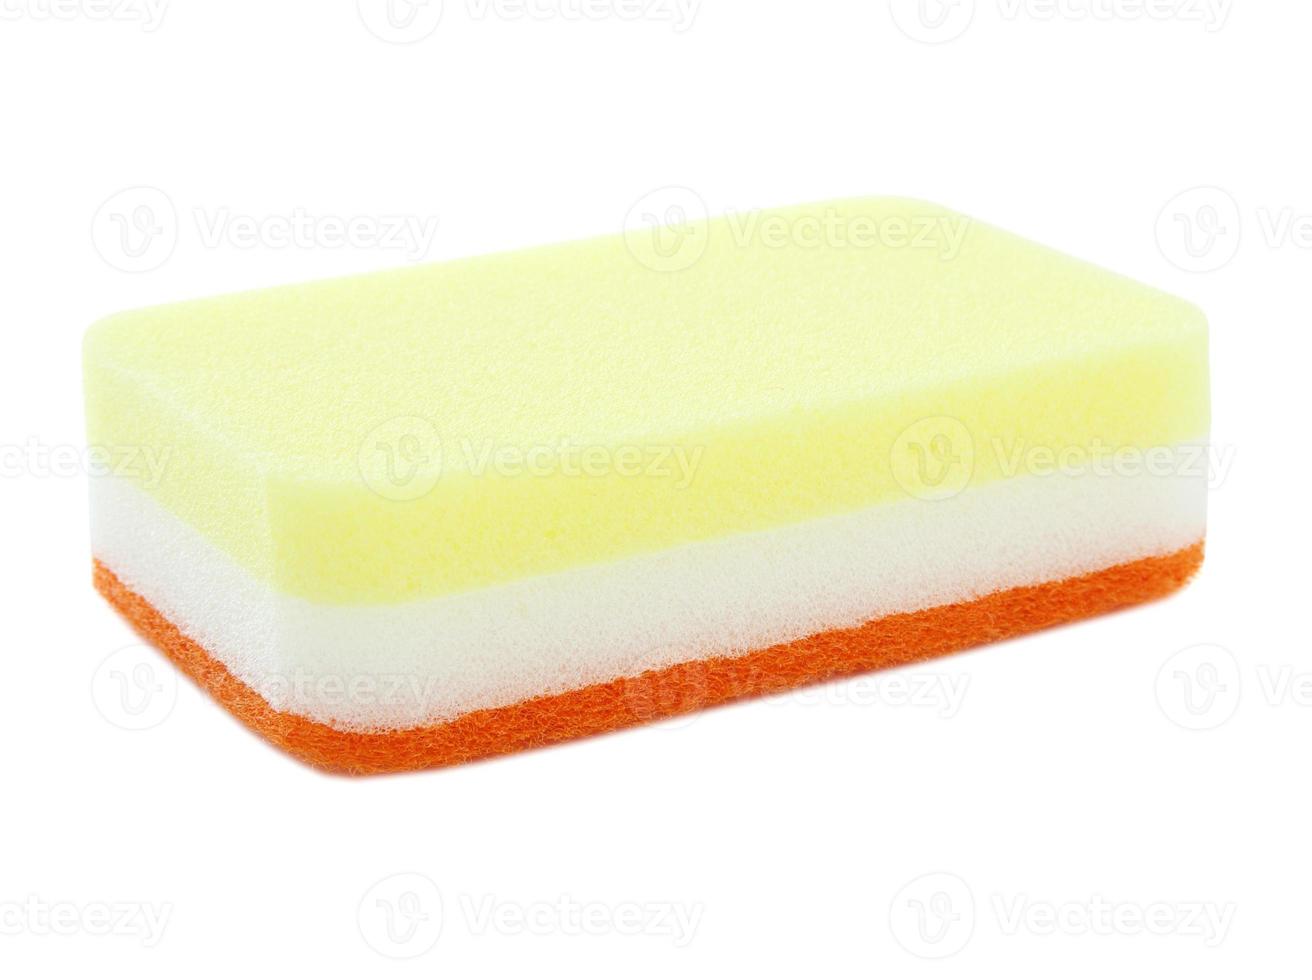 household sponge isolated on a white background photo